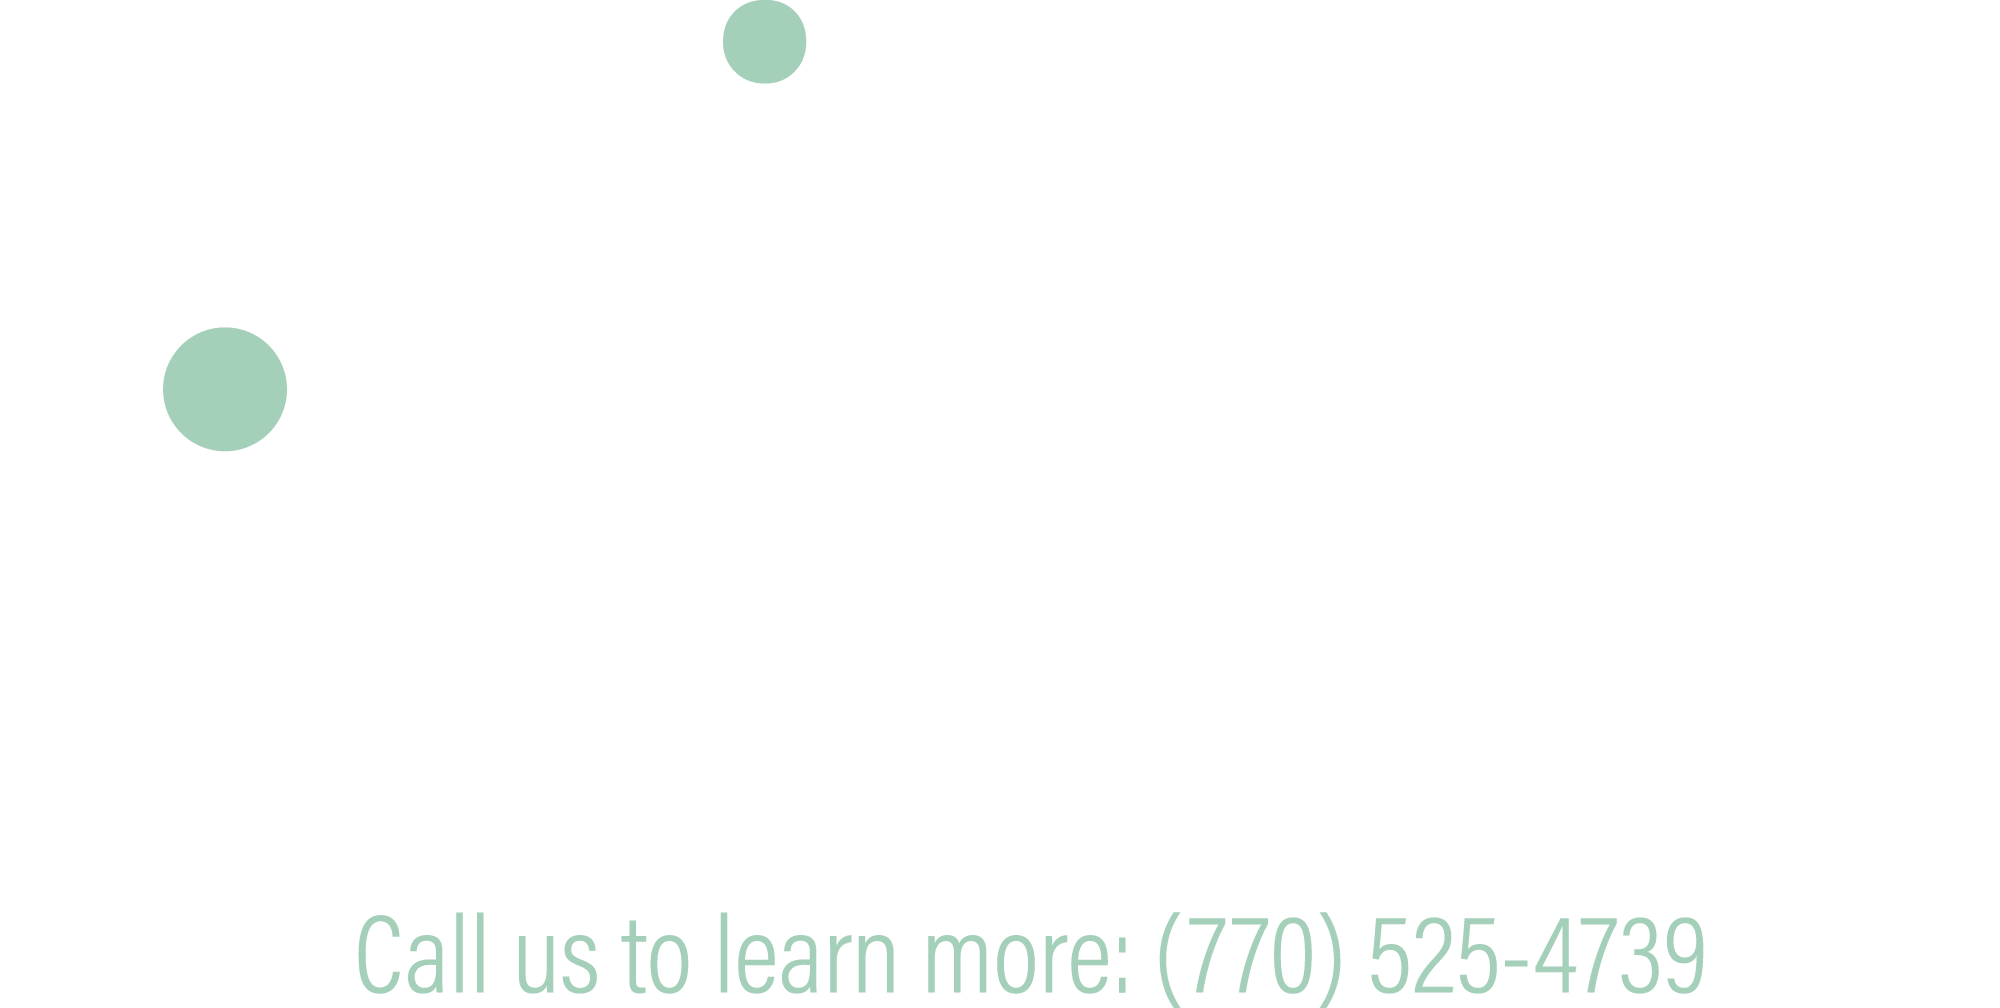 Universal Storage Group